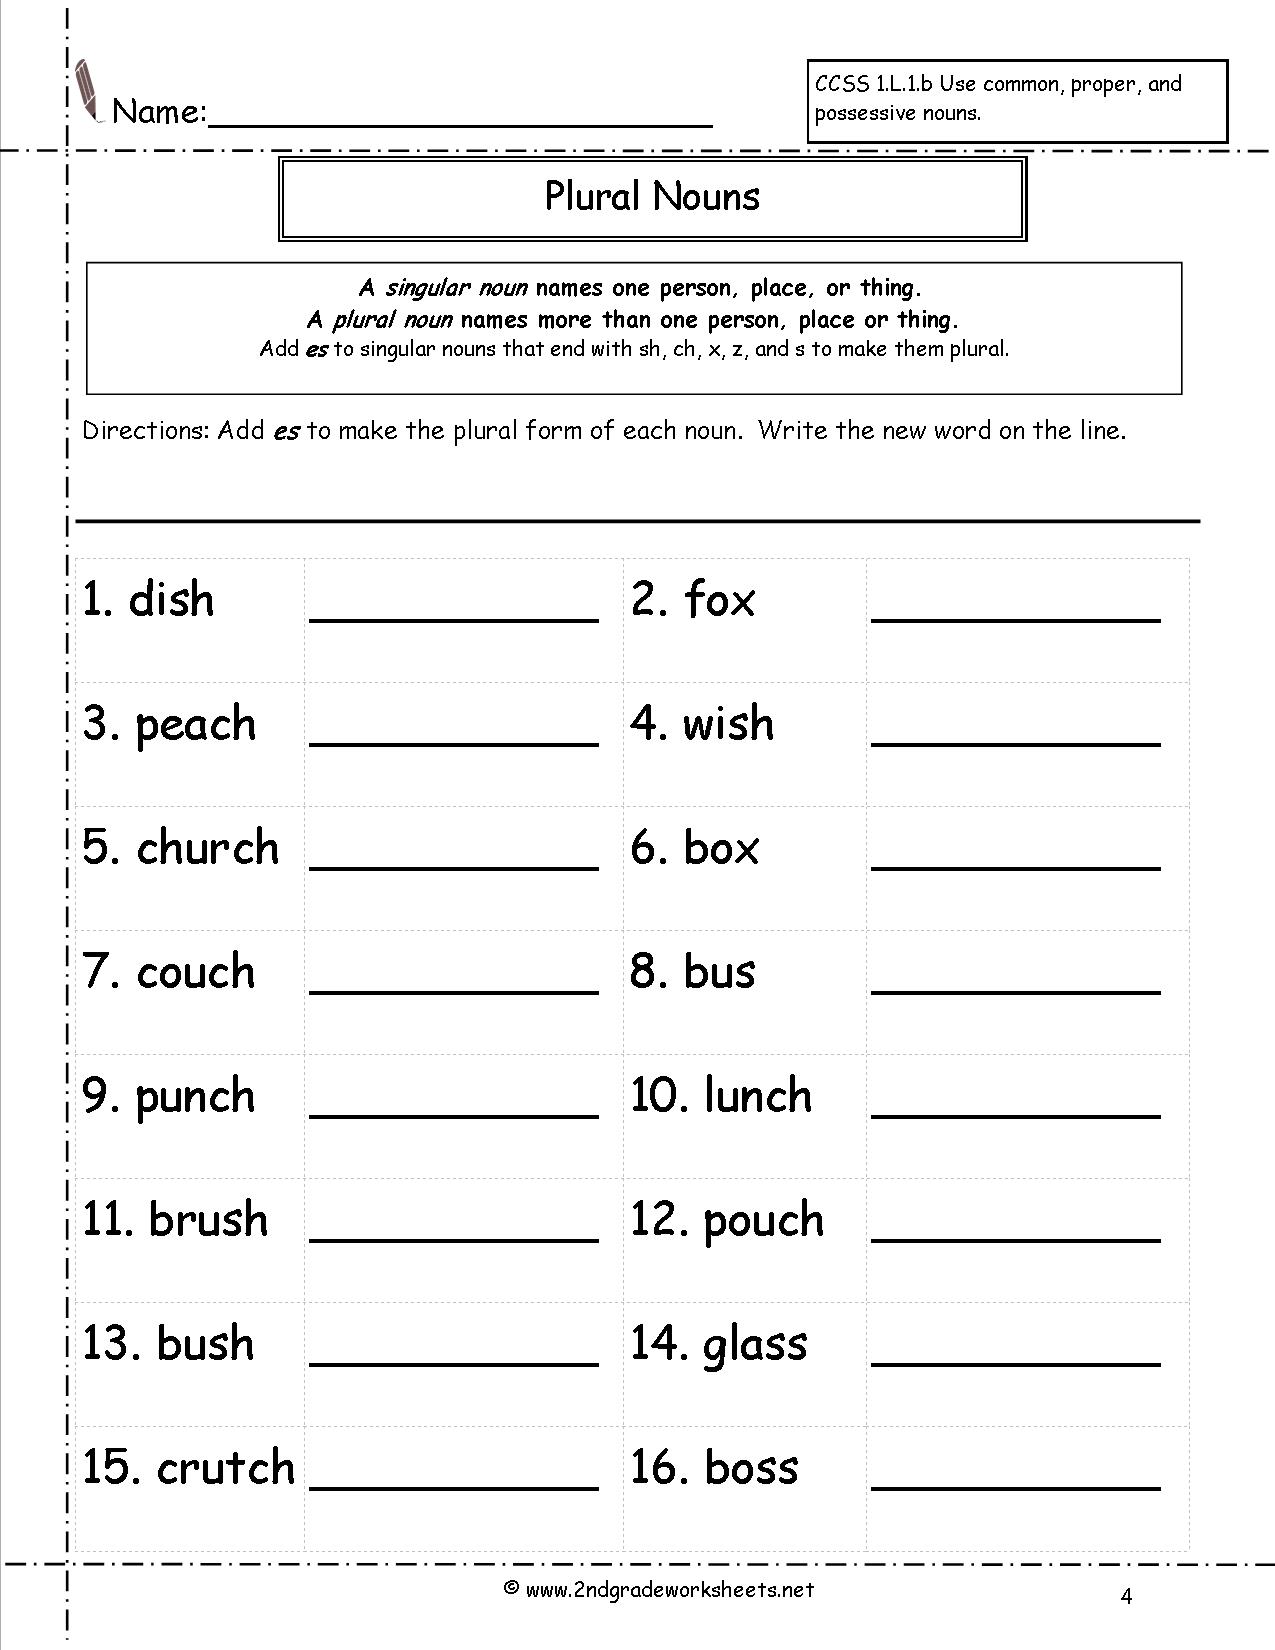 nouns-worksheets-singular-and-plural-nouns-worksheets-plural-nouns-worksheet-plurals